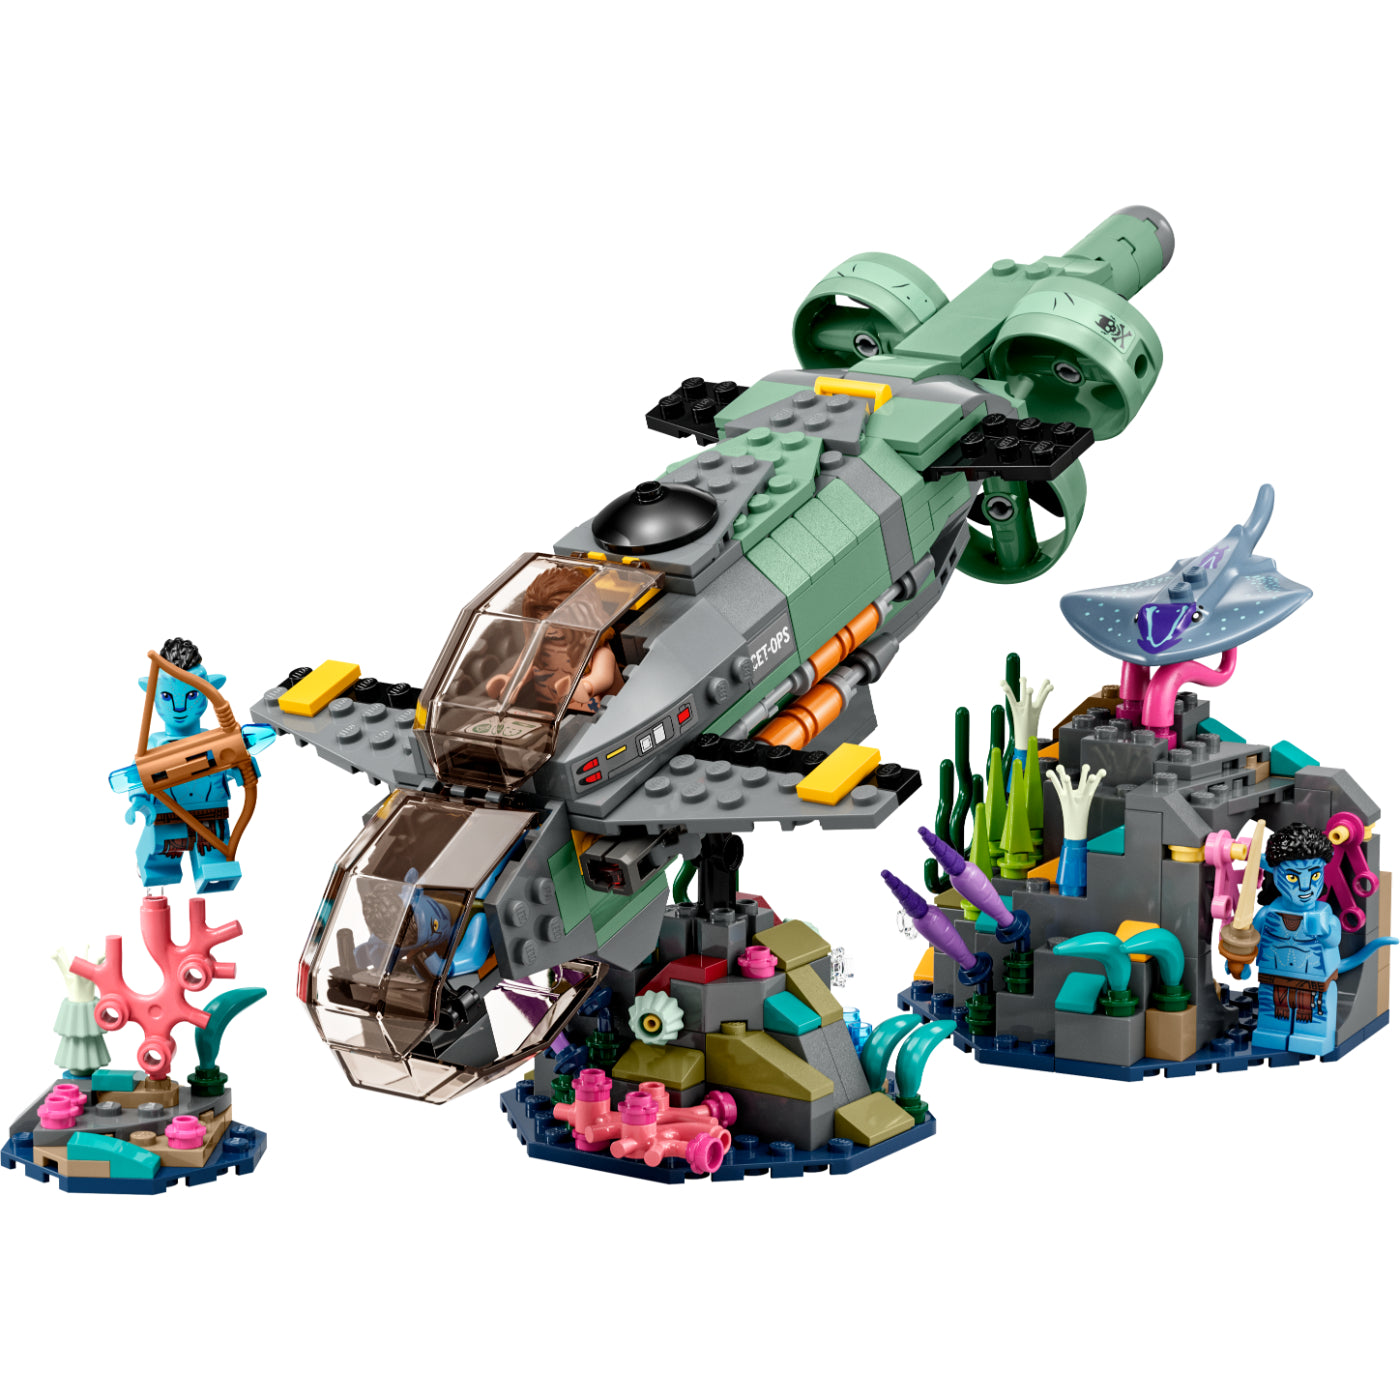 LEGO® Avatar Mako Submarine (75577)